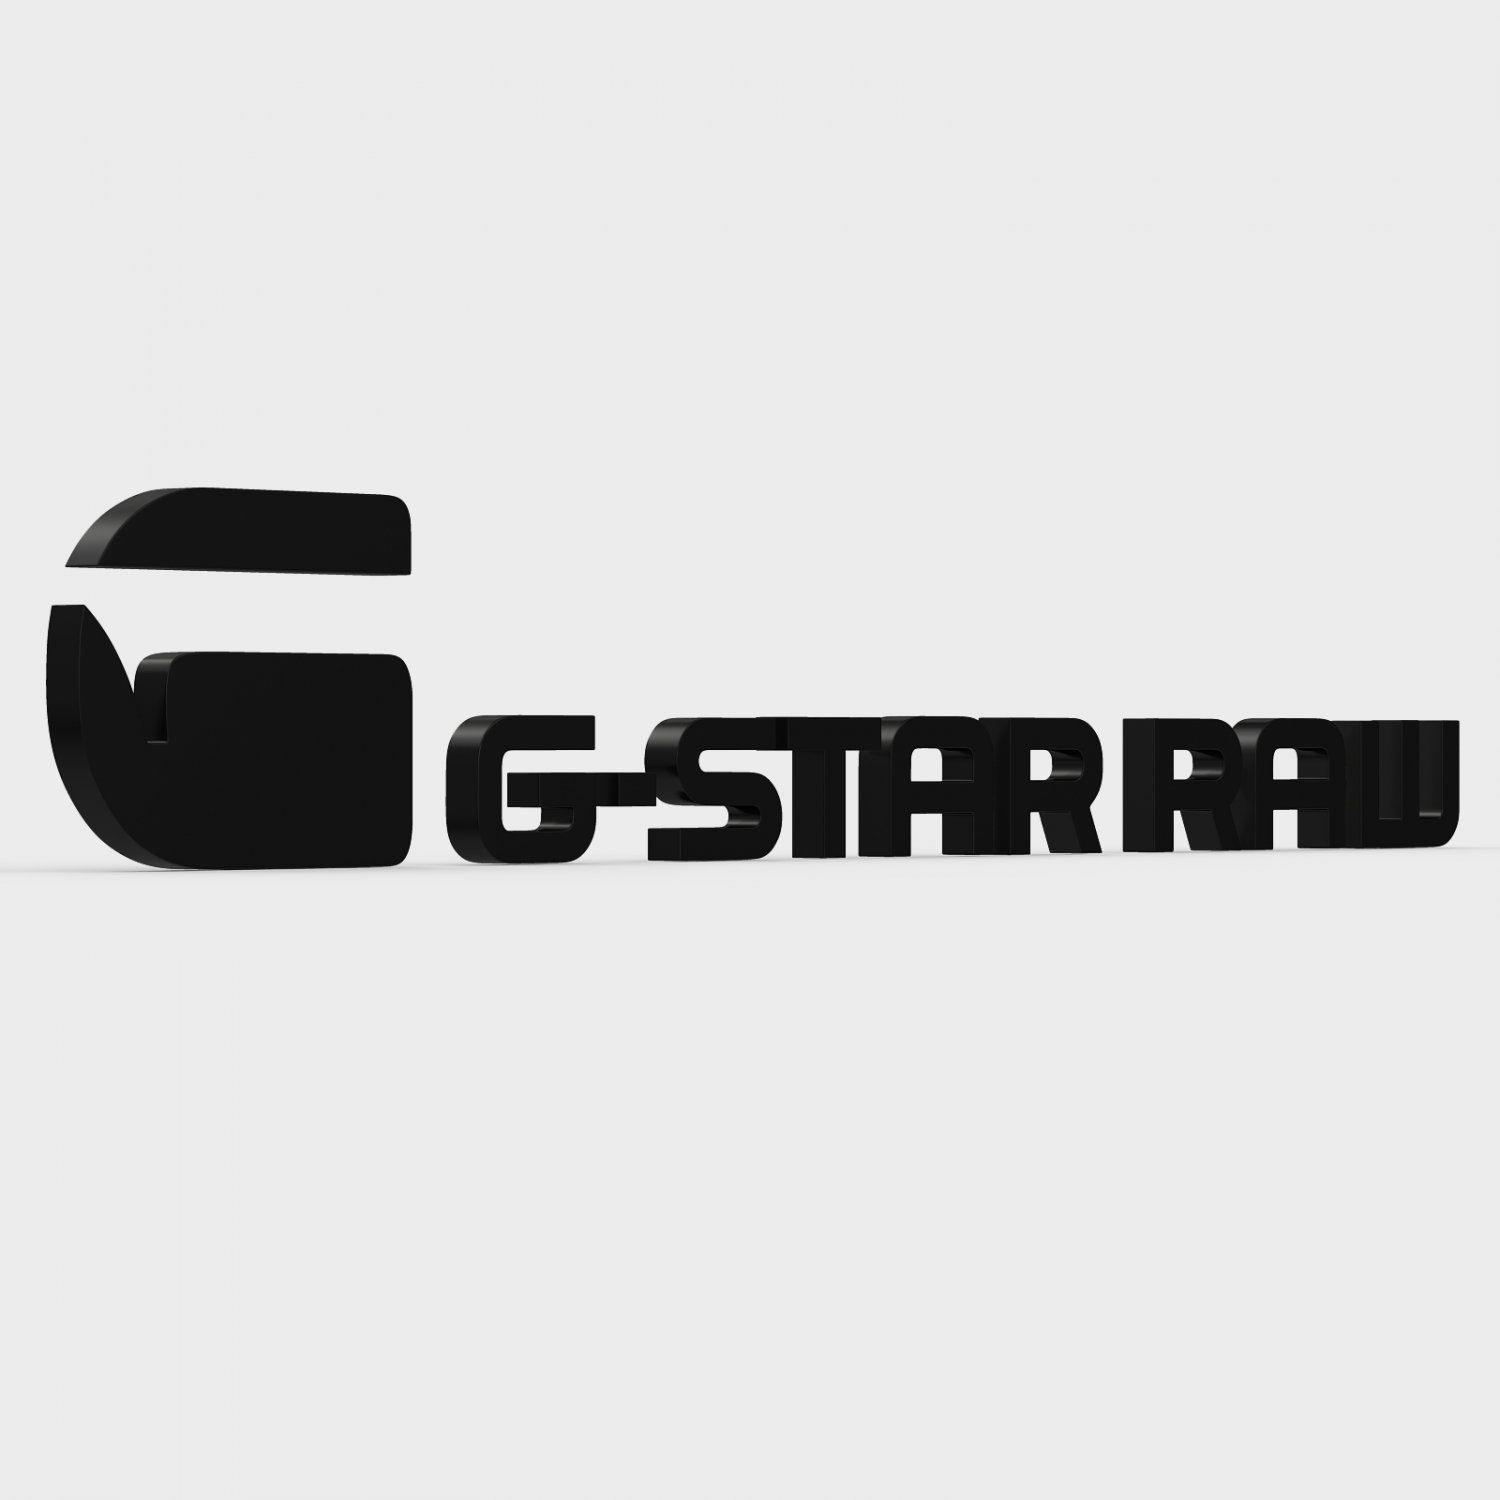 G-Star Logo - G-star raw logo 3D Model in Clothing 3DExport